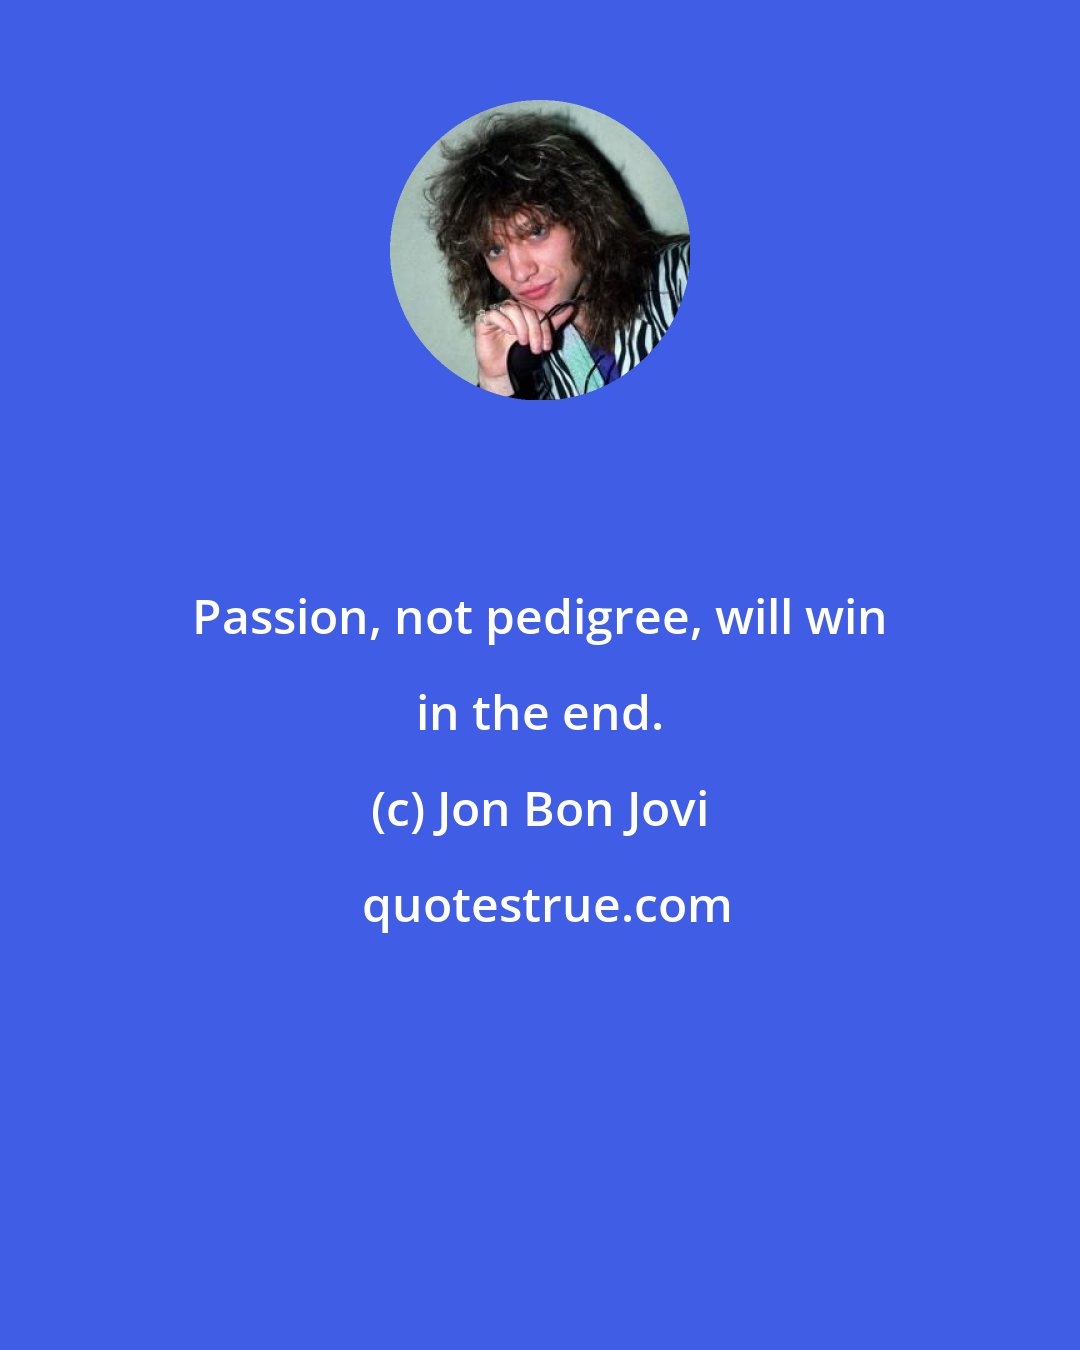 Jon Bon Jovi: Passion, not pedigree, will win in the end.